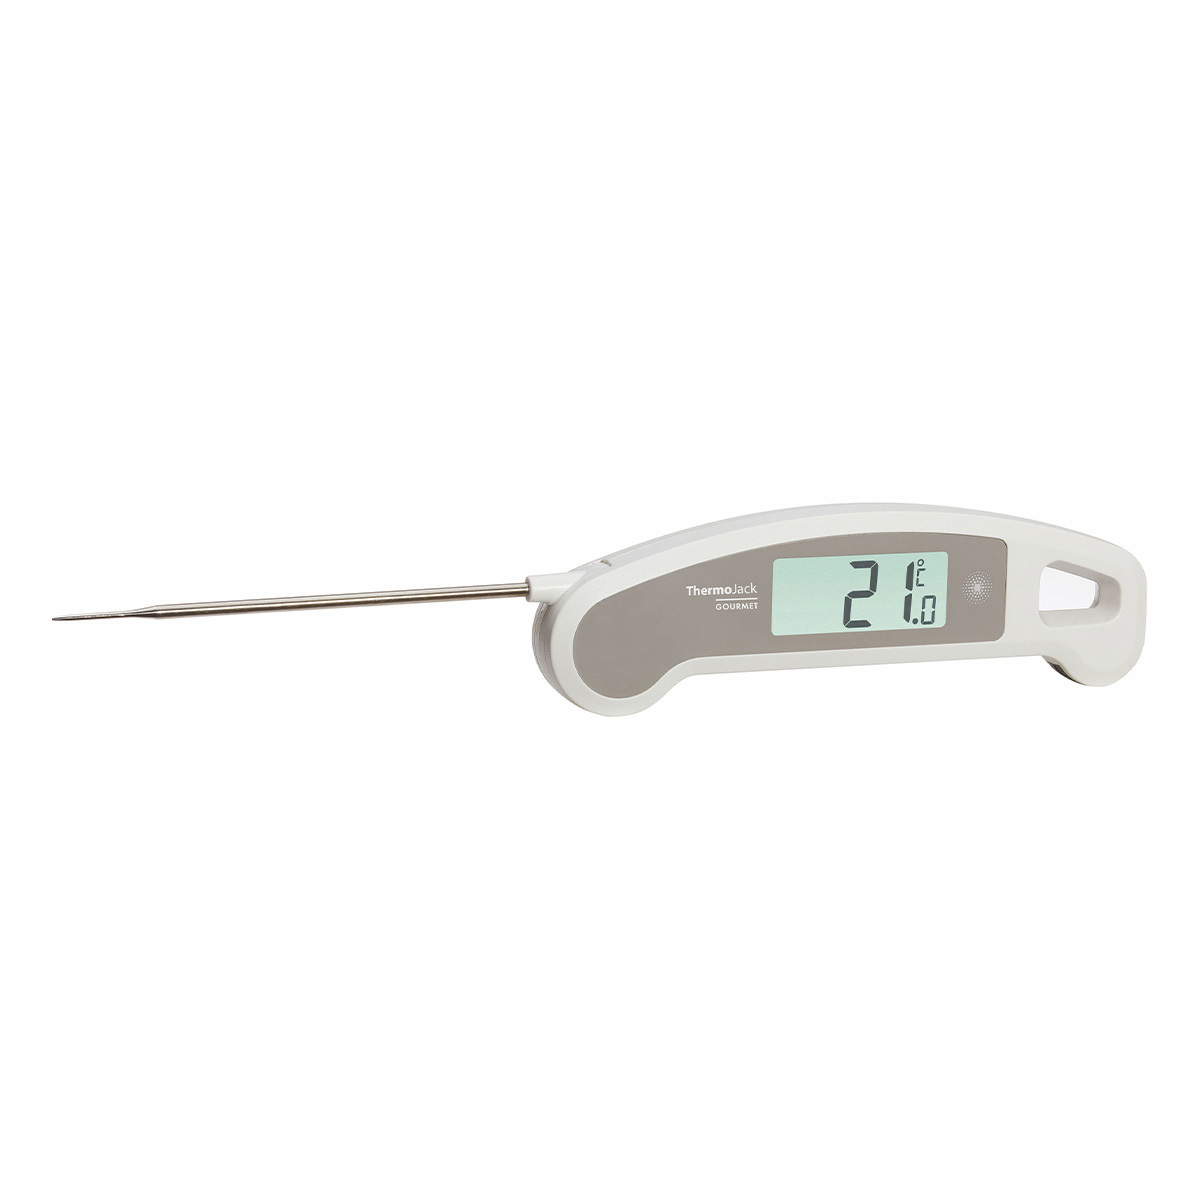 30-1060-02-profi-küchenthermometer-thermo-jack-gourmet-1200x1200px.jpg